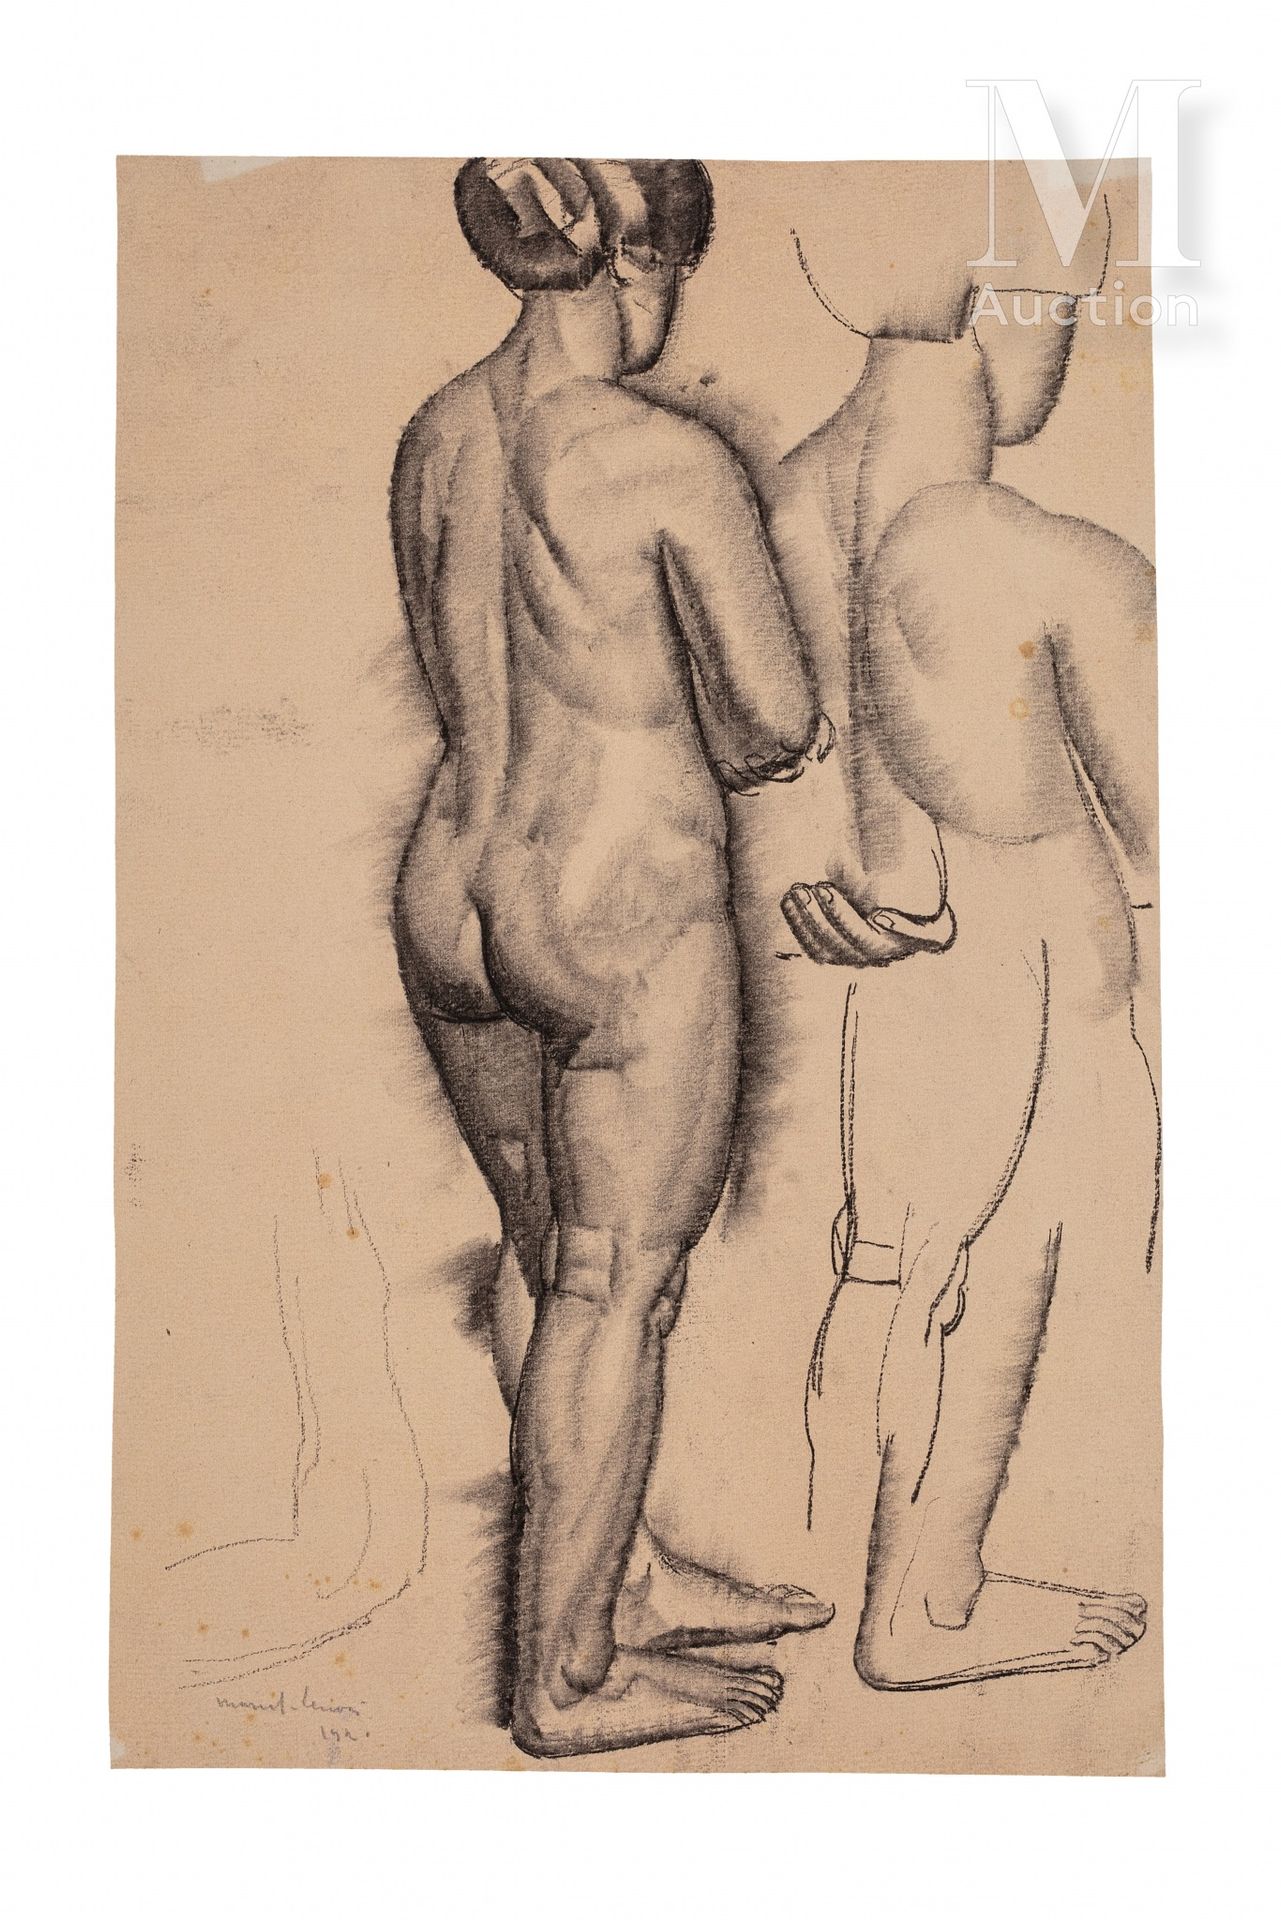 Jules Oury dit Marcel-Lenoir (Montauban 1872 - Montricoux 1931) 从后面看一个女人的裸体

粘贴在&hellip;